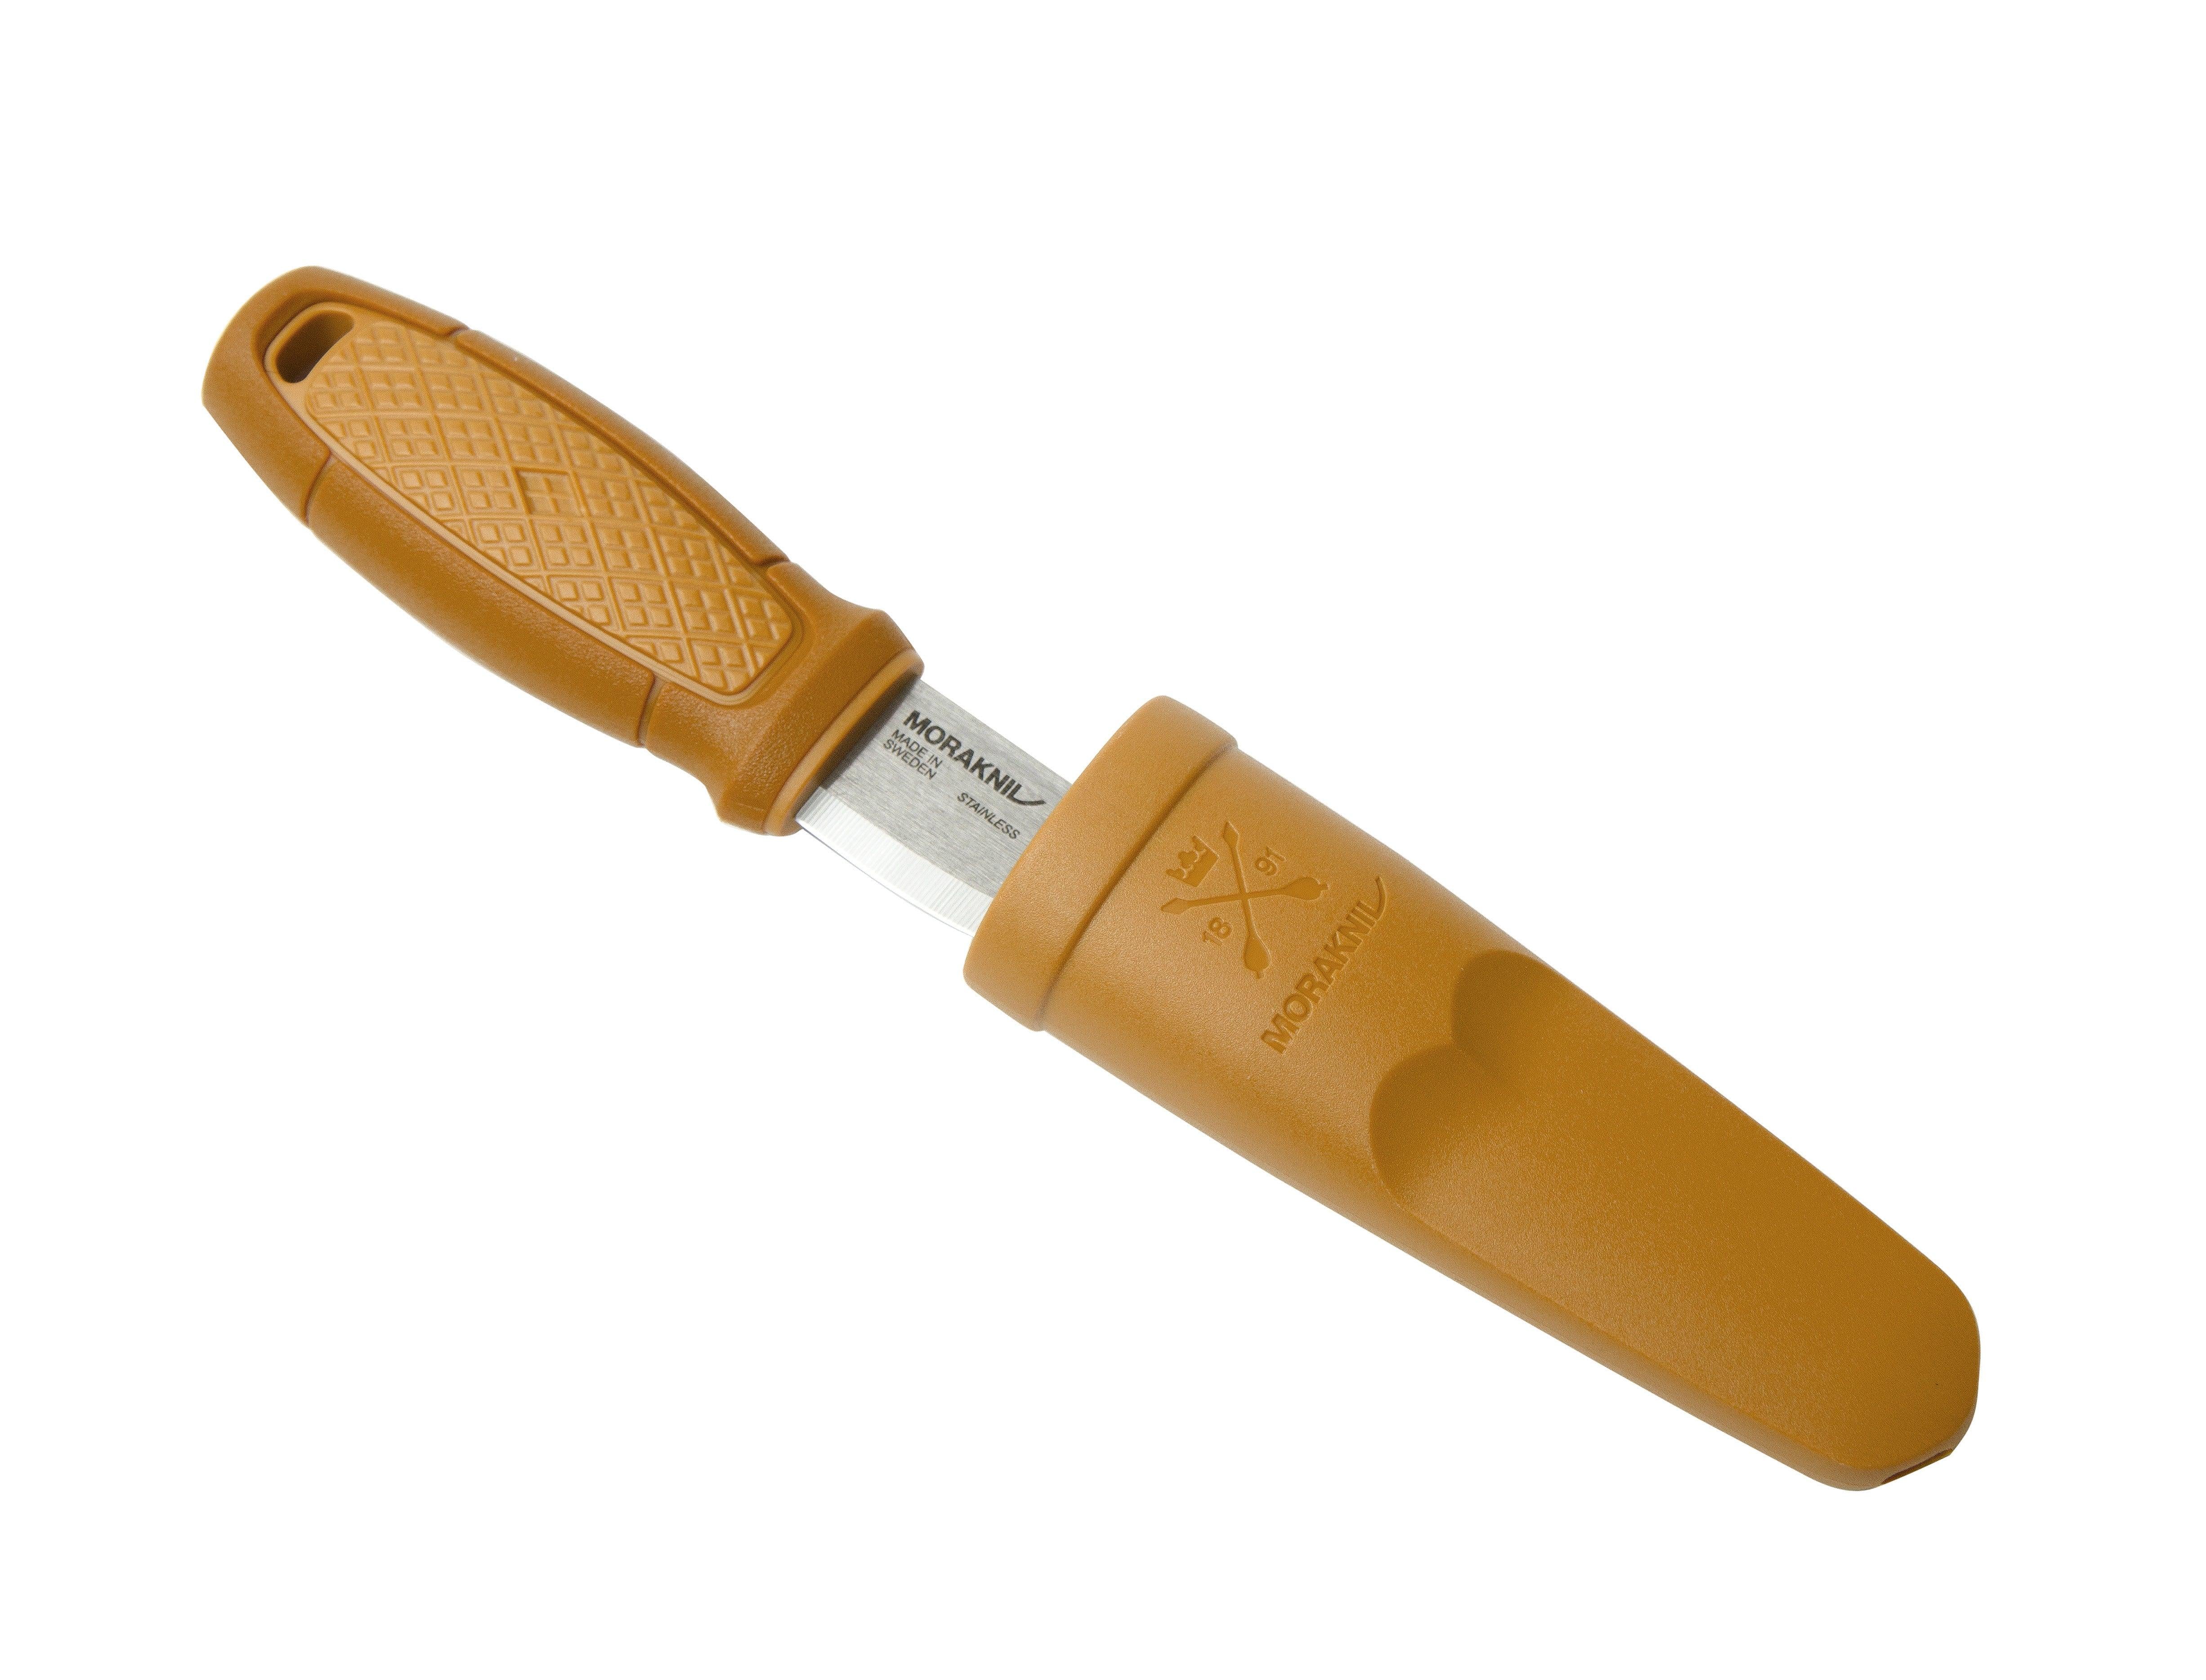 Morakniv® Eldris Stainless Knife with Plastic Sheath - Trusted Gear Company LLC